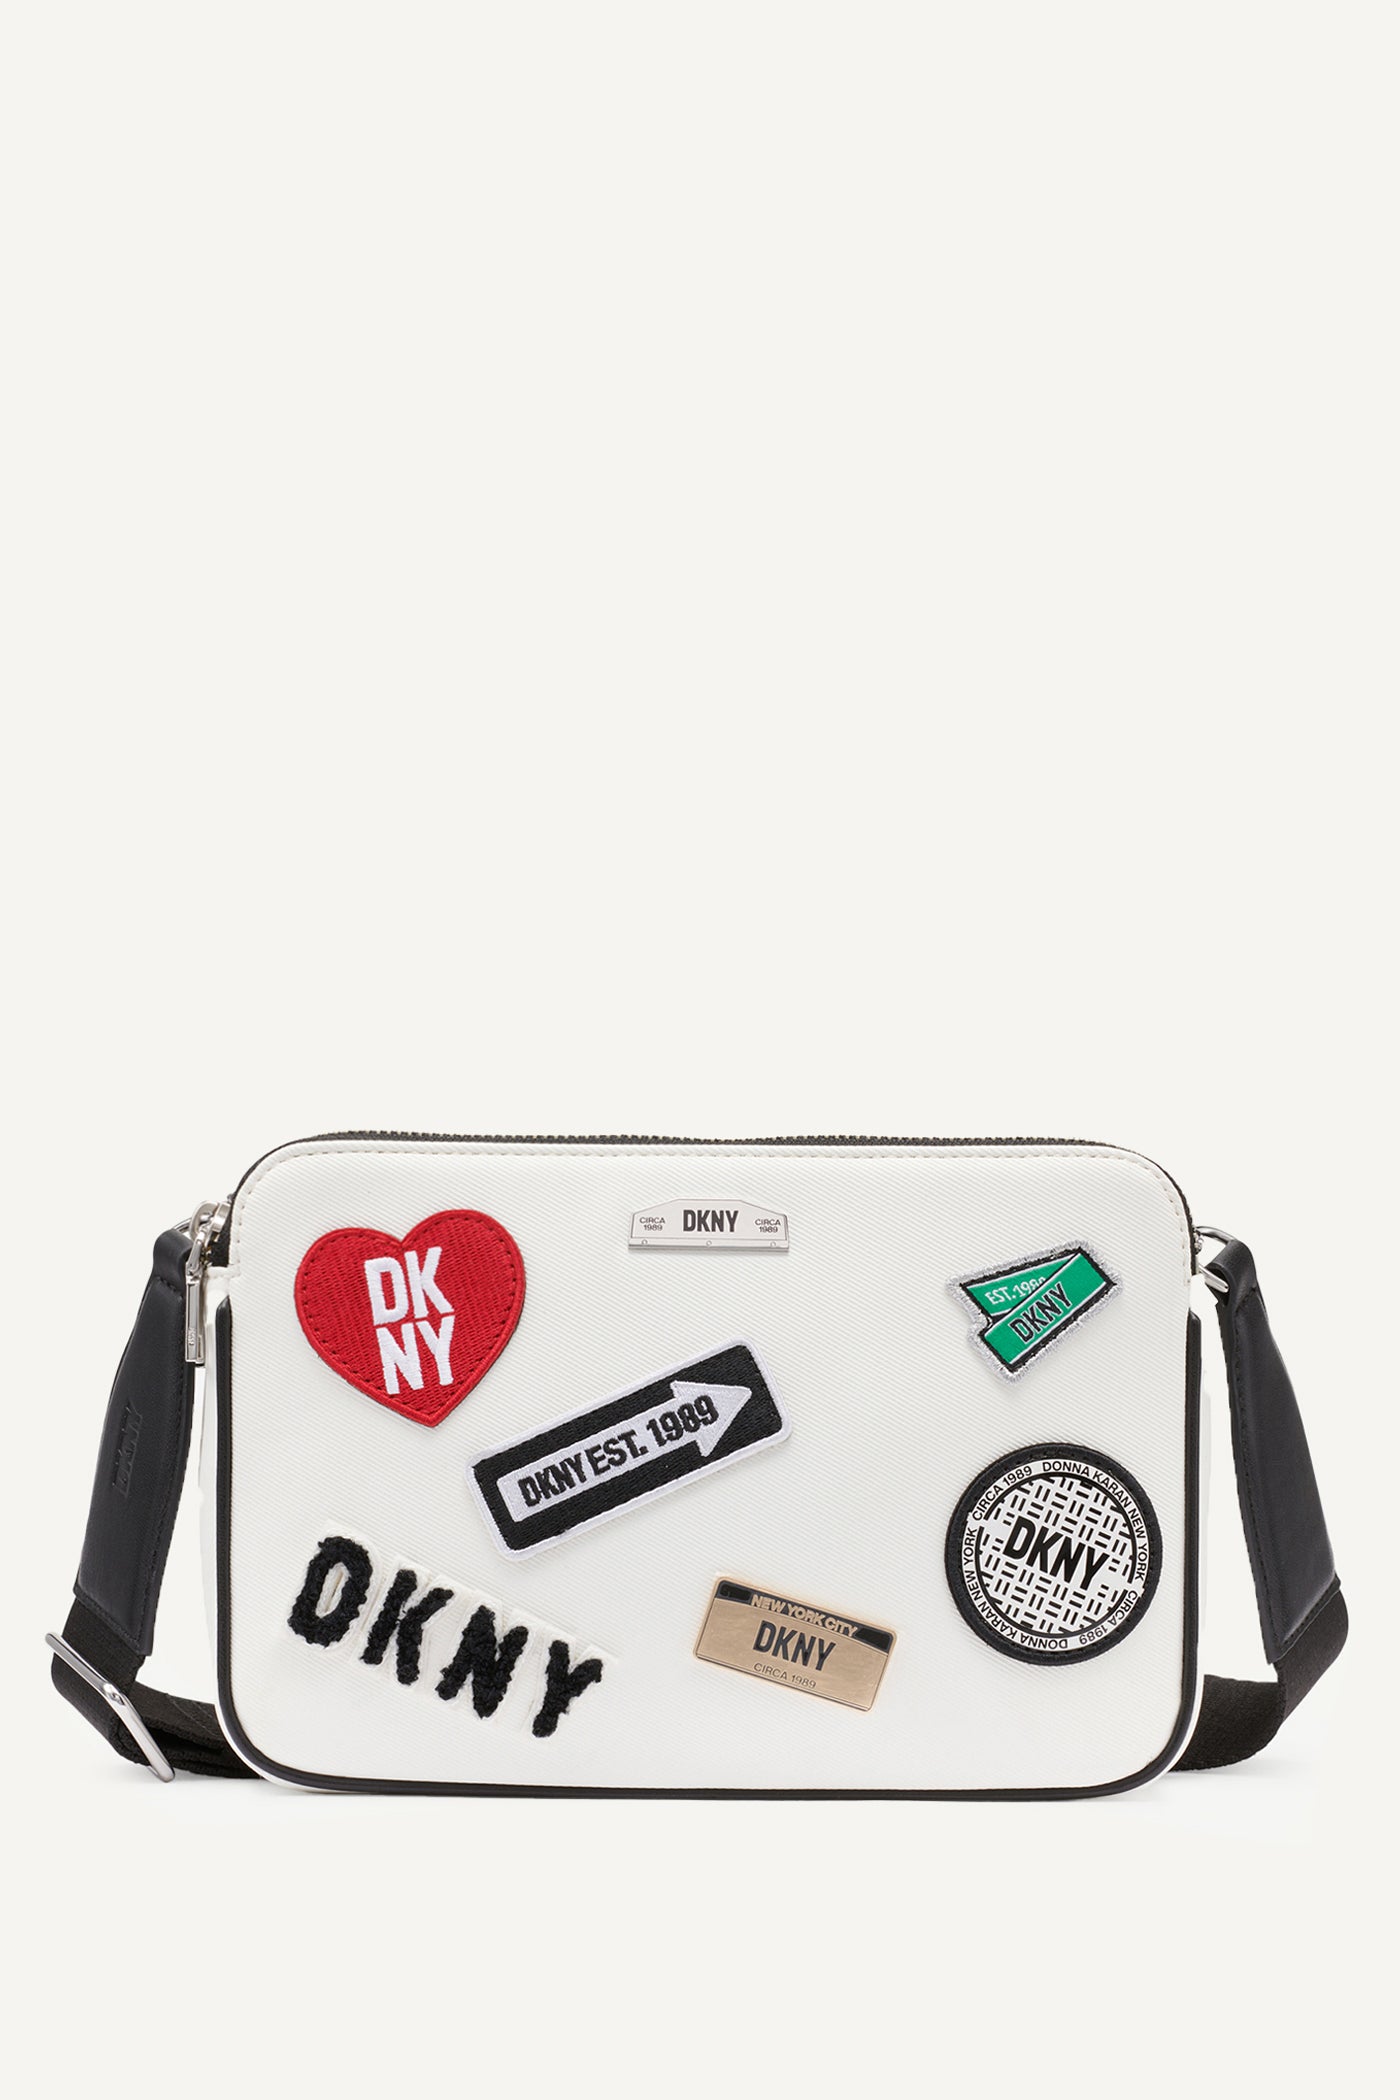 NWOT DKNY Signature Handbag  Dkny bag, Handbag, Mini bag